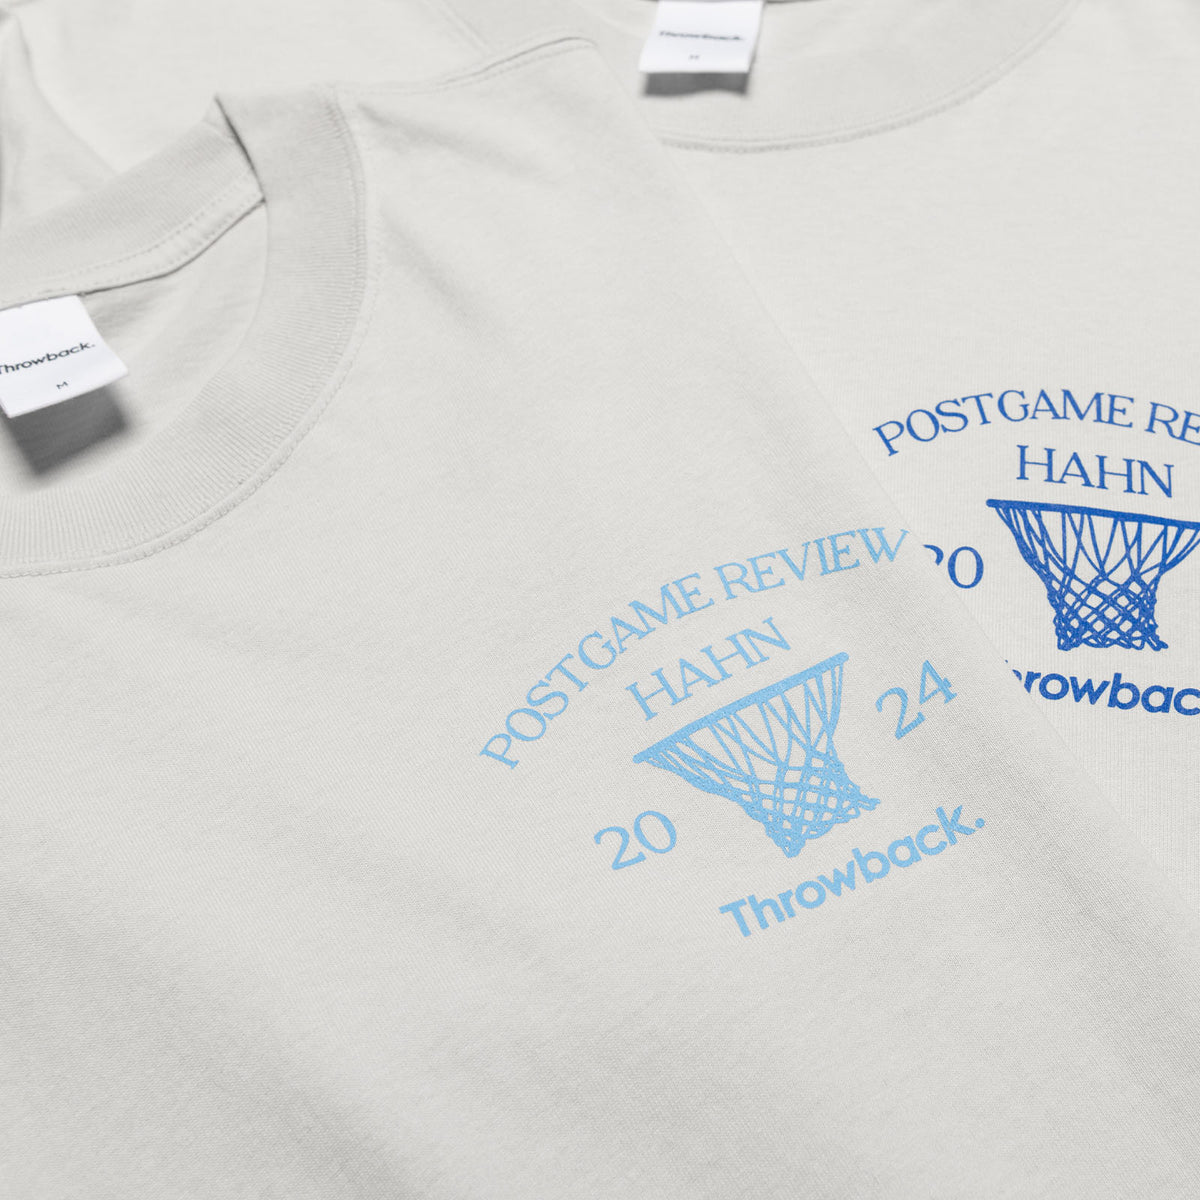 Throwback X Hahn Postgame Review T-Shirt - Faded Bone/Carolina